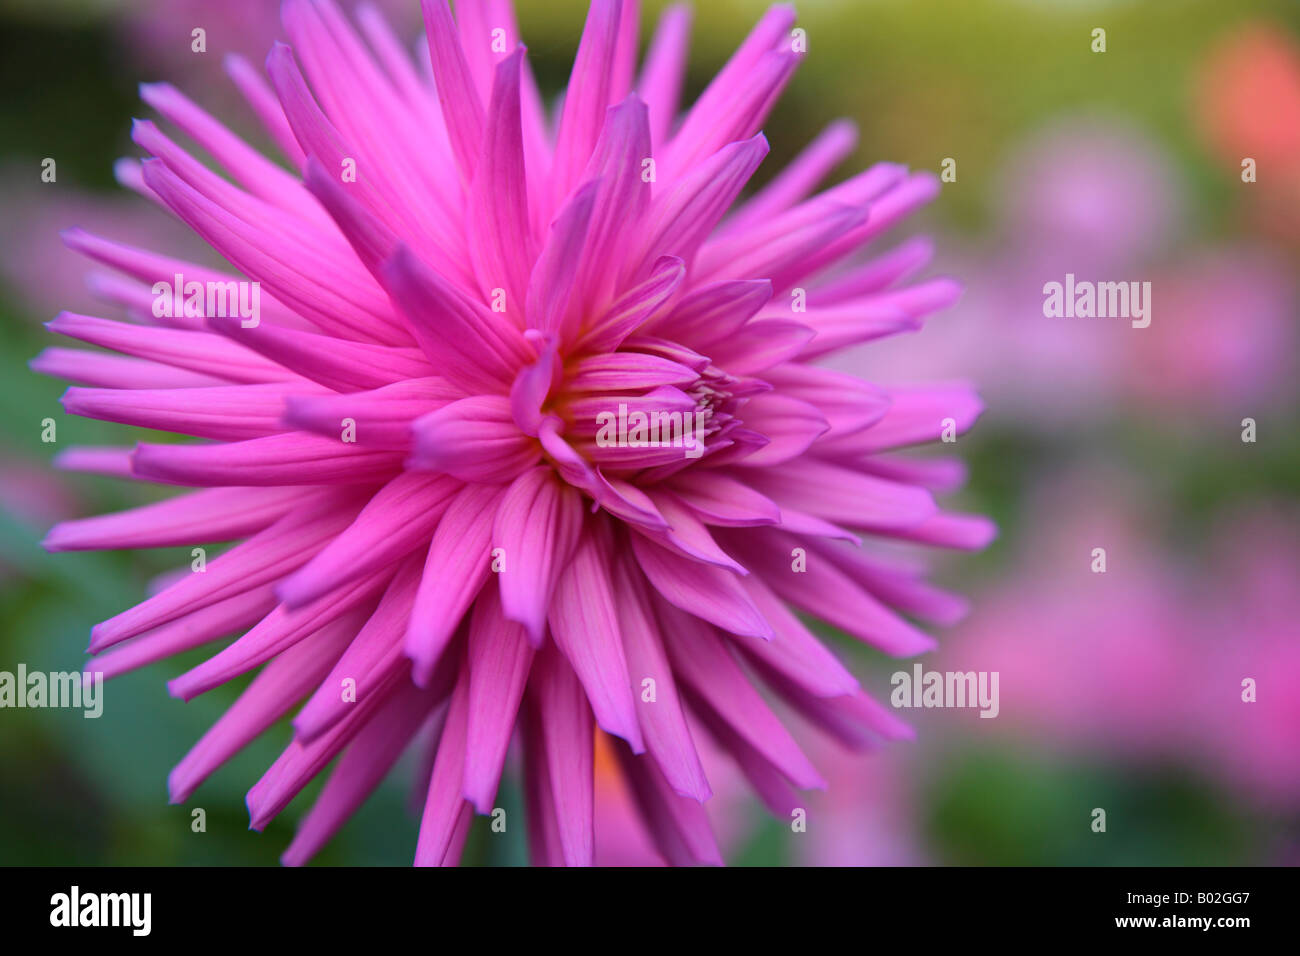 'Pink' 'dahlia' single flower head close up Stock Photo